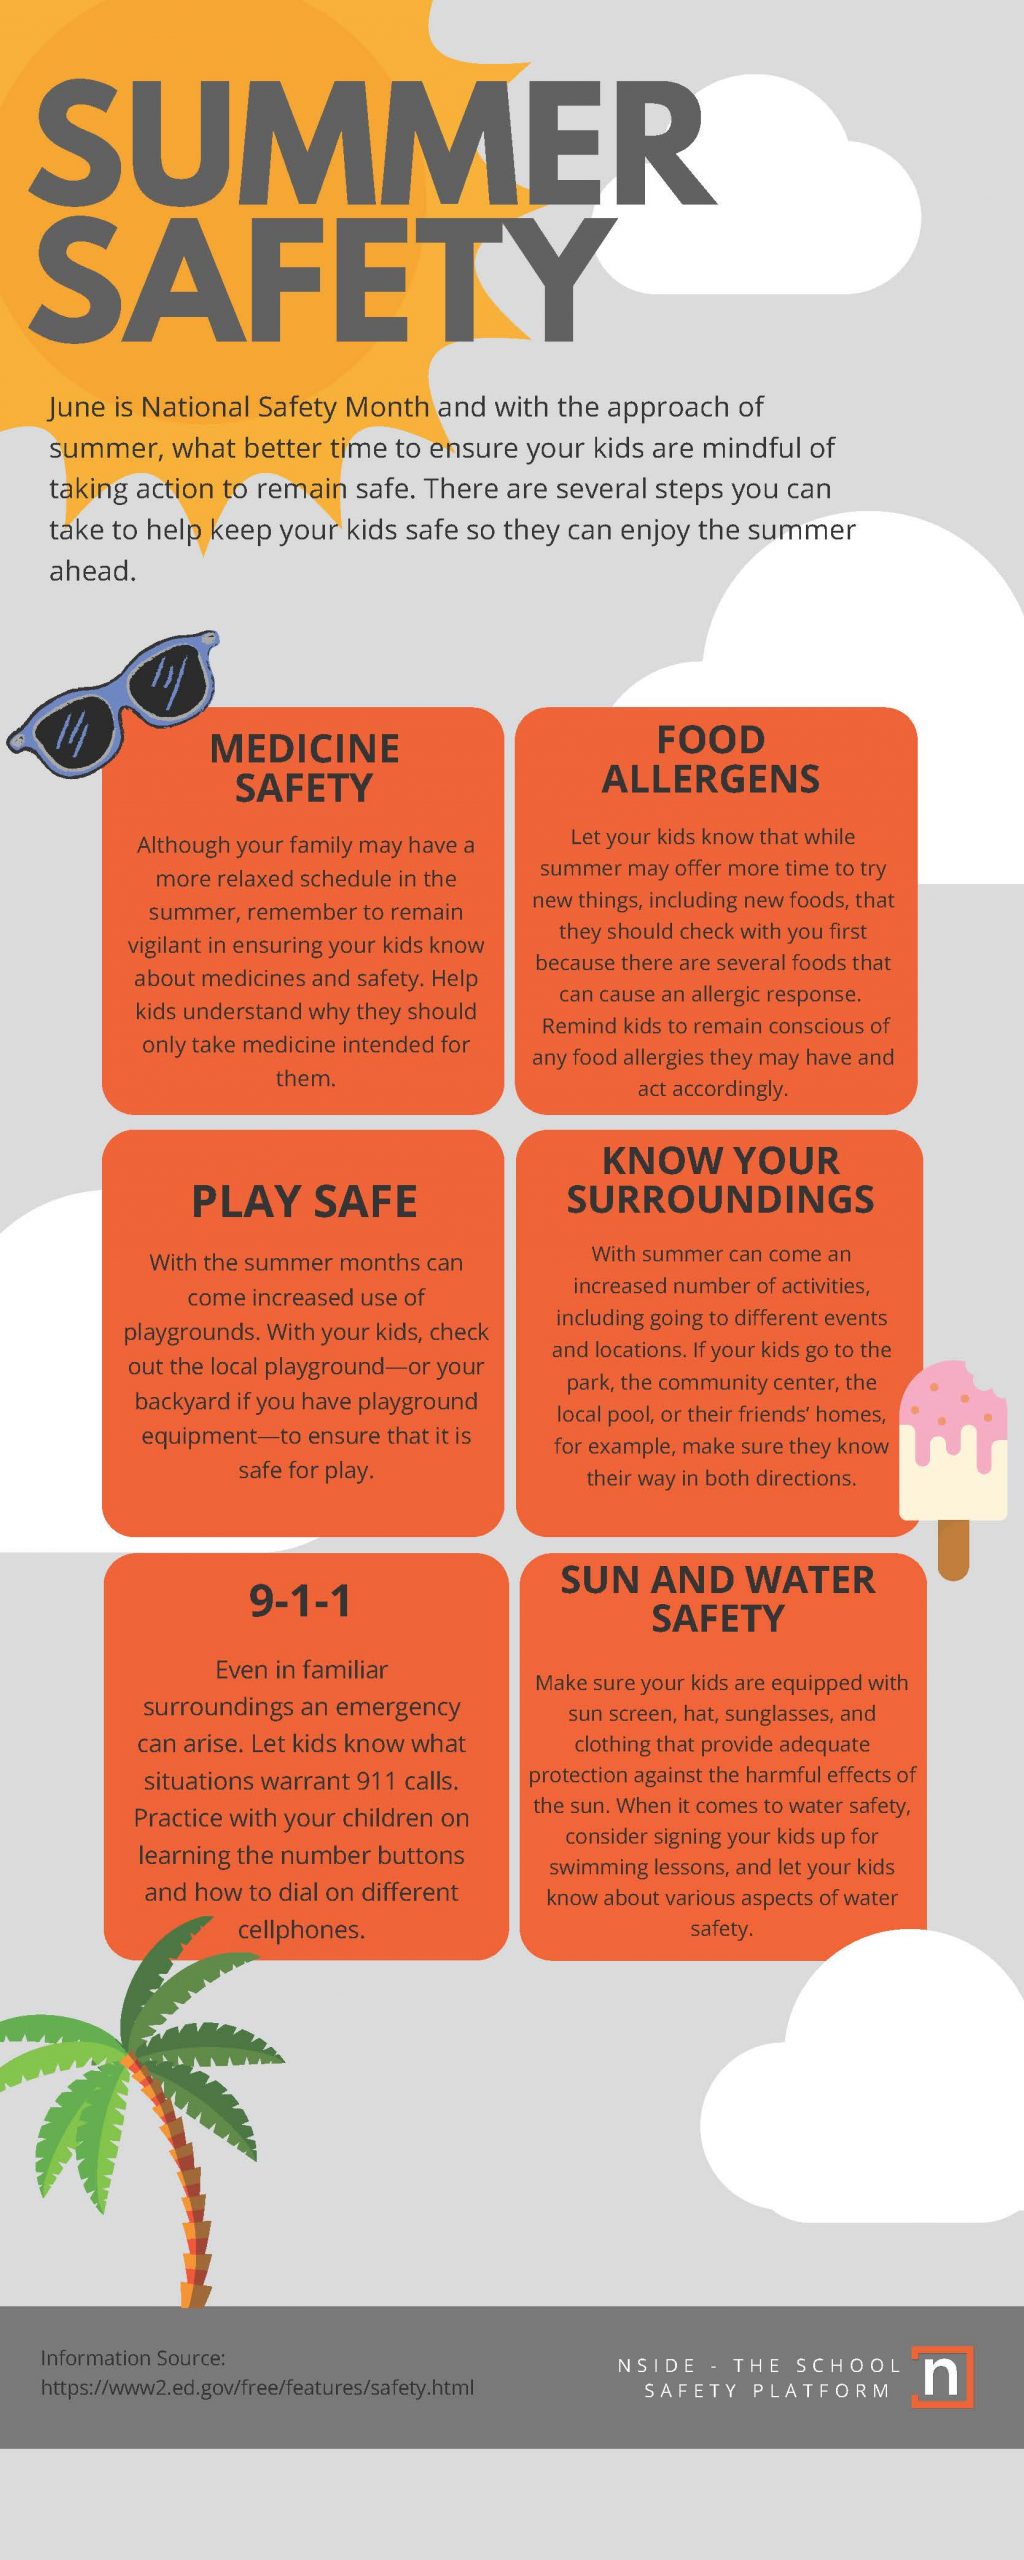 summer safety infographic- nside the school safety platform